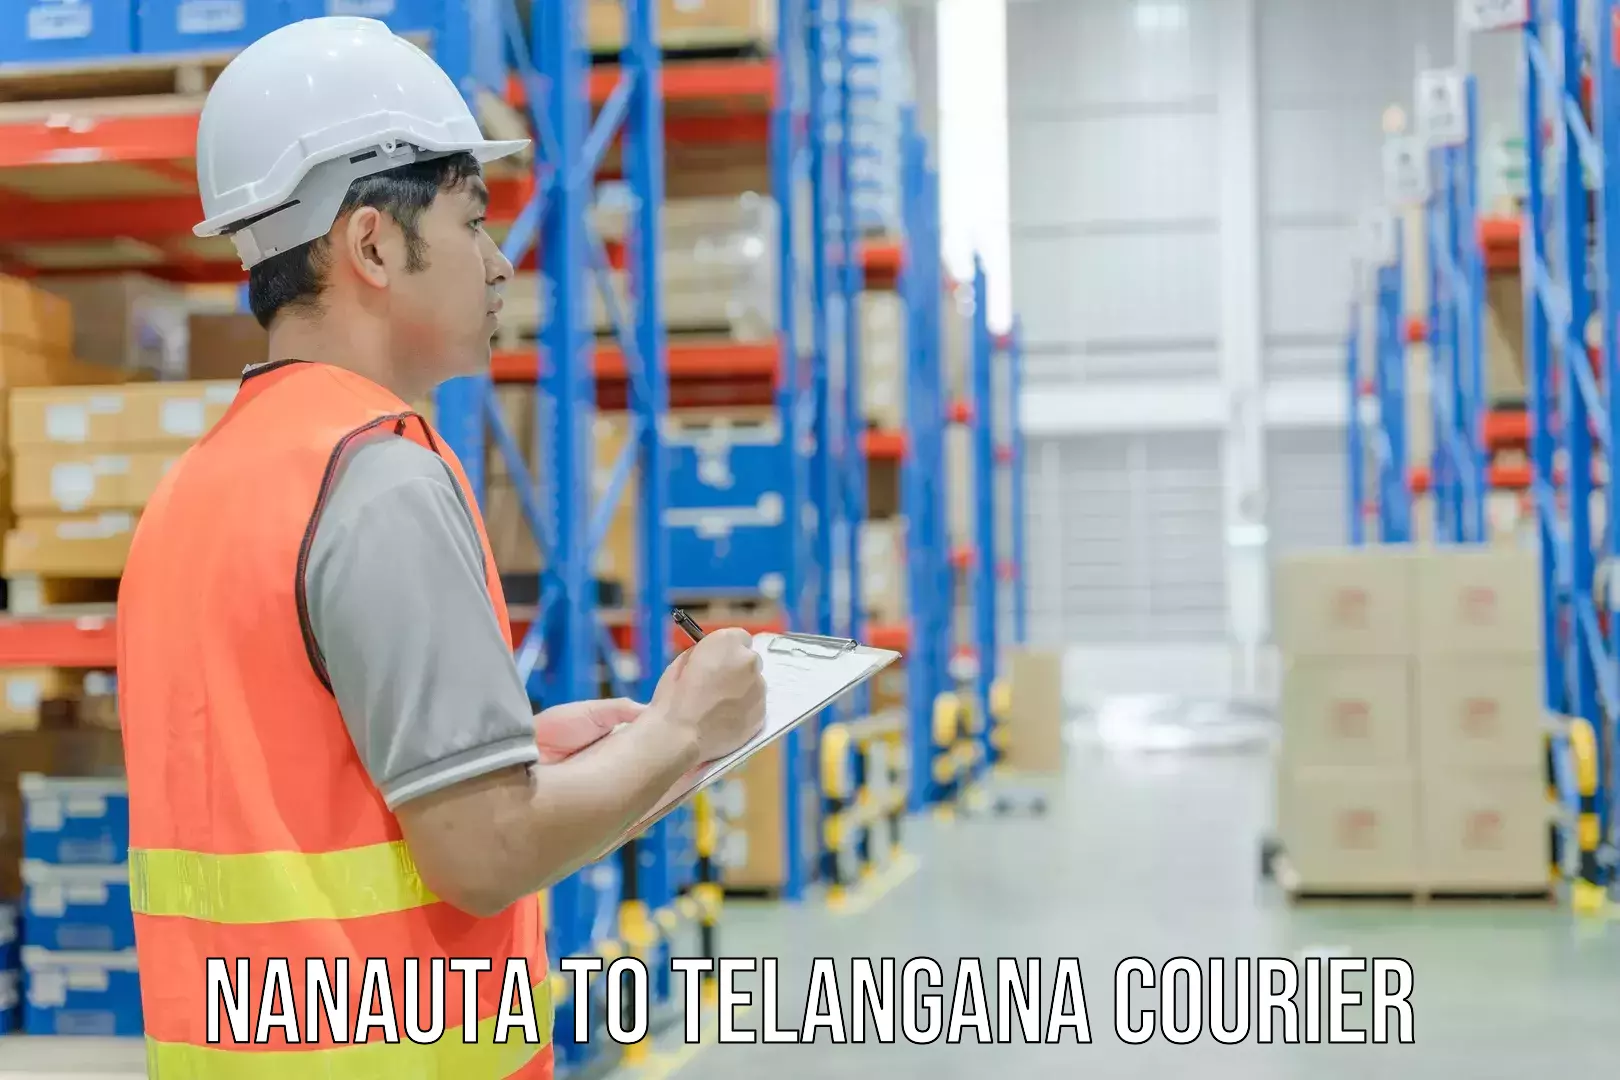 Courier service efficiency Nanauta to Tadvai